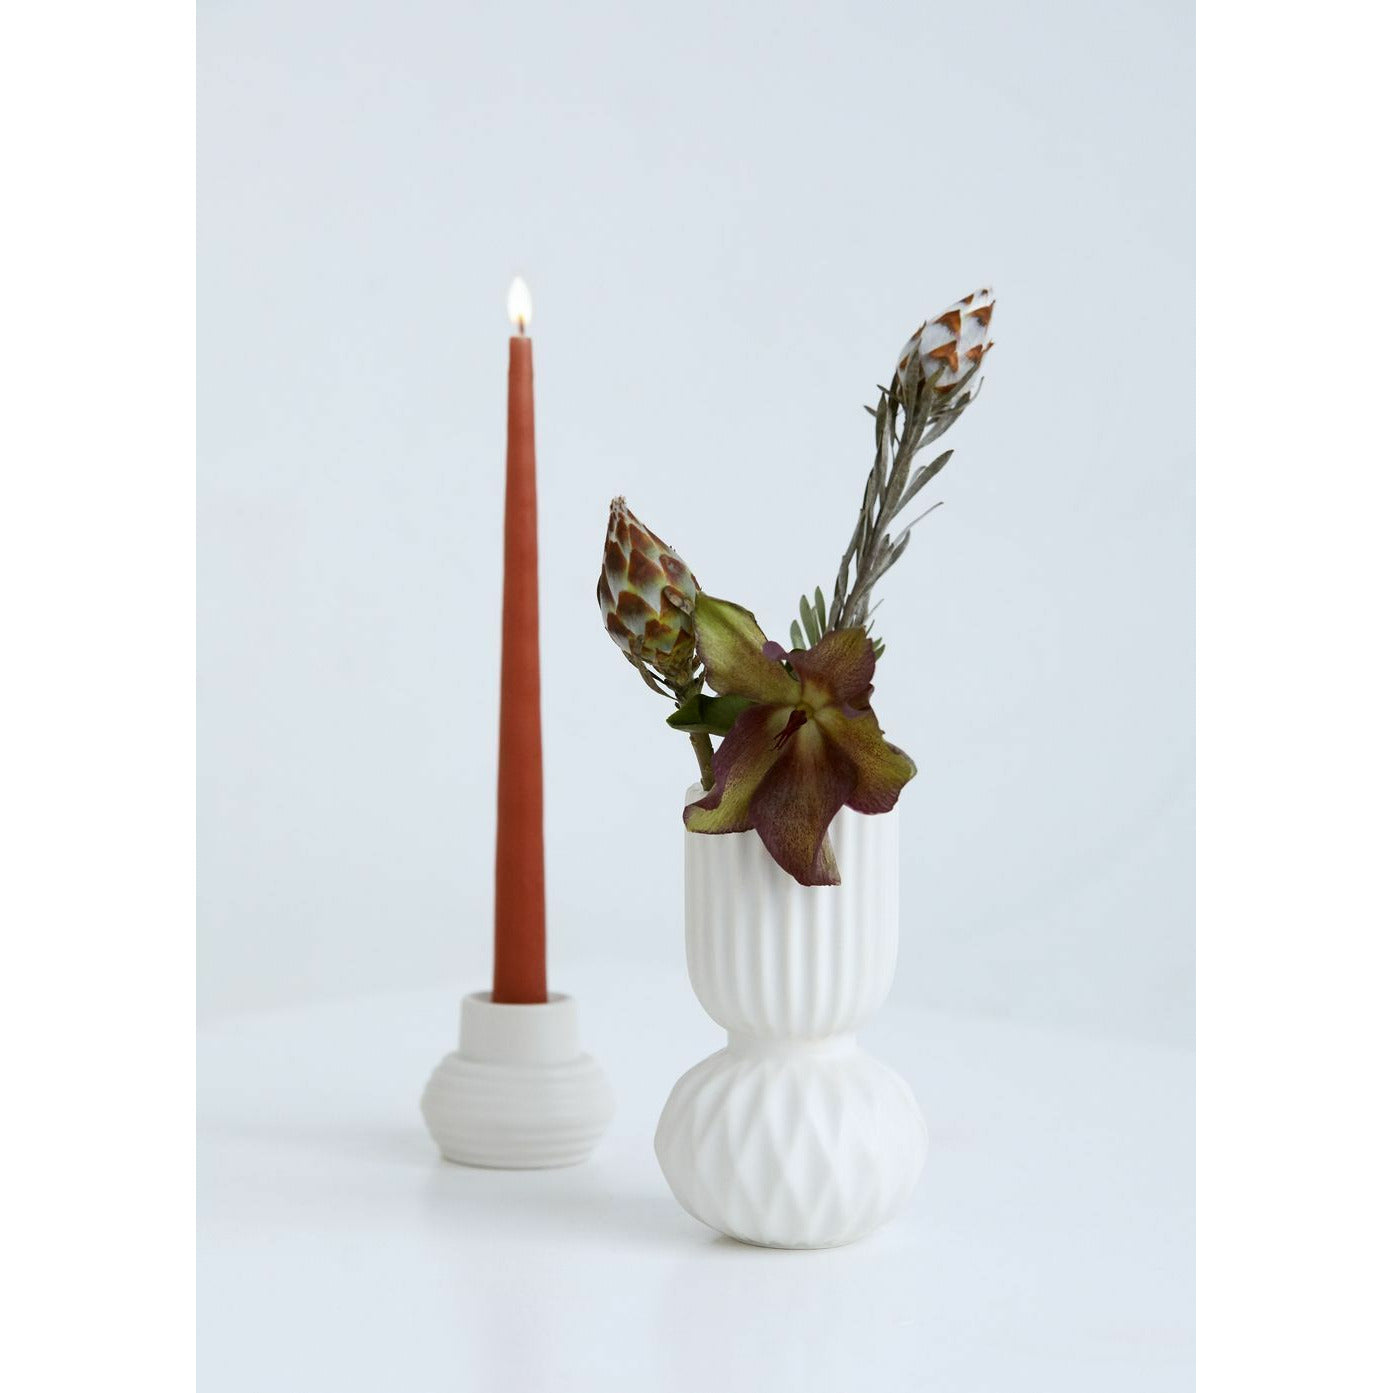 Vase di Dottir Rufflebell, bianco